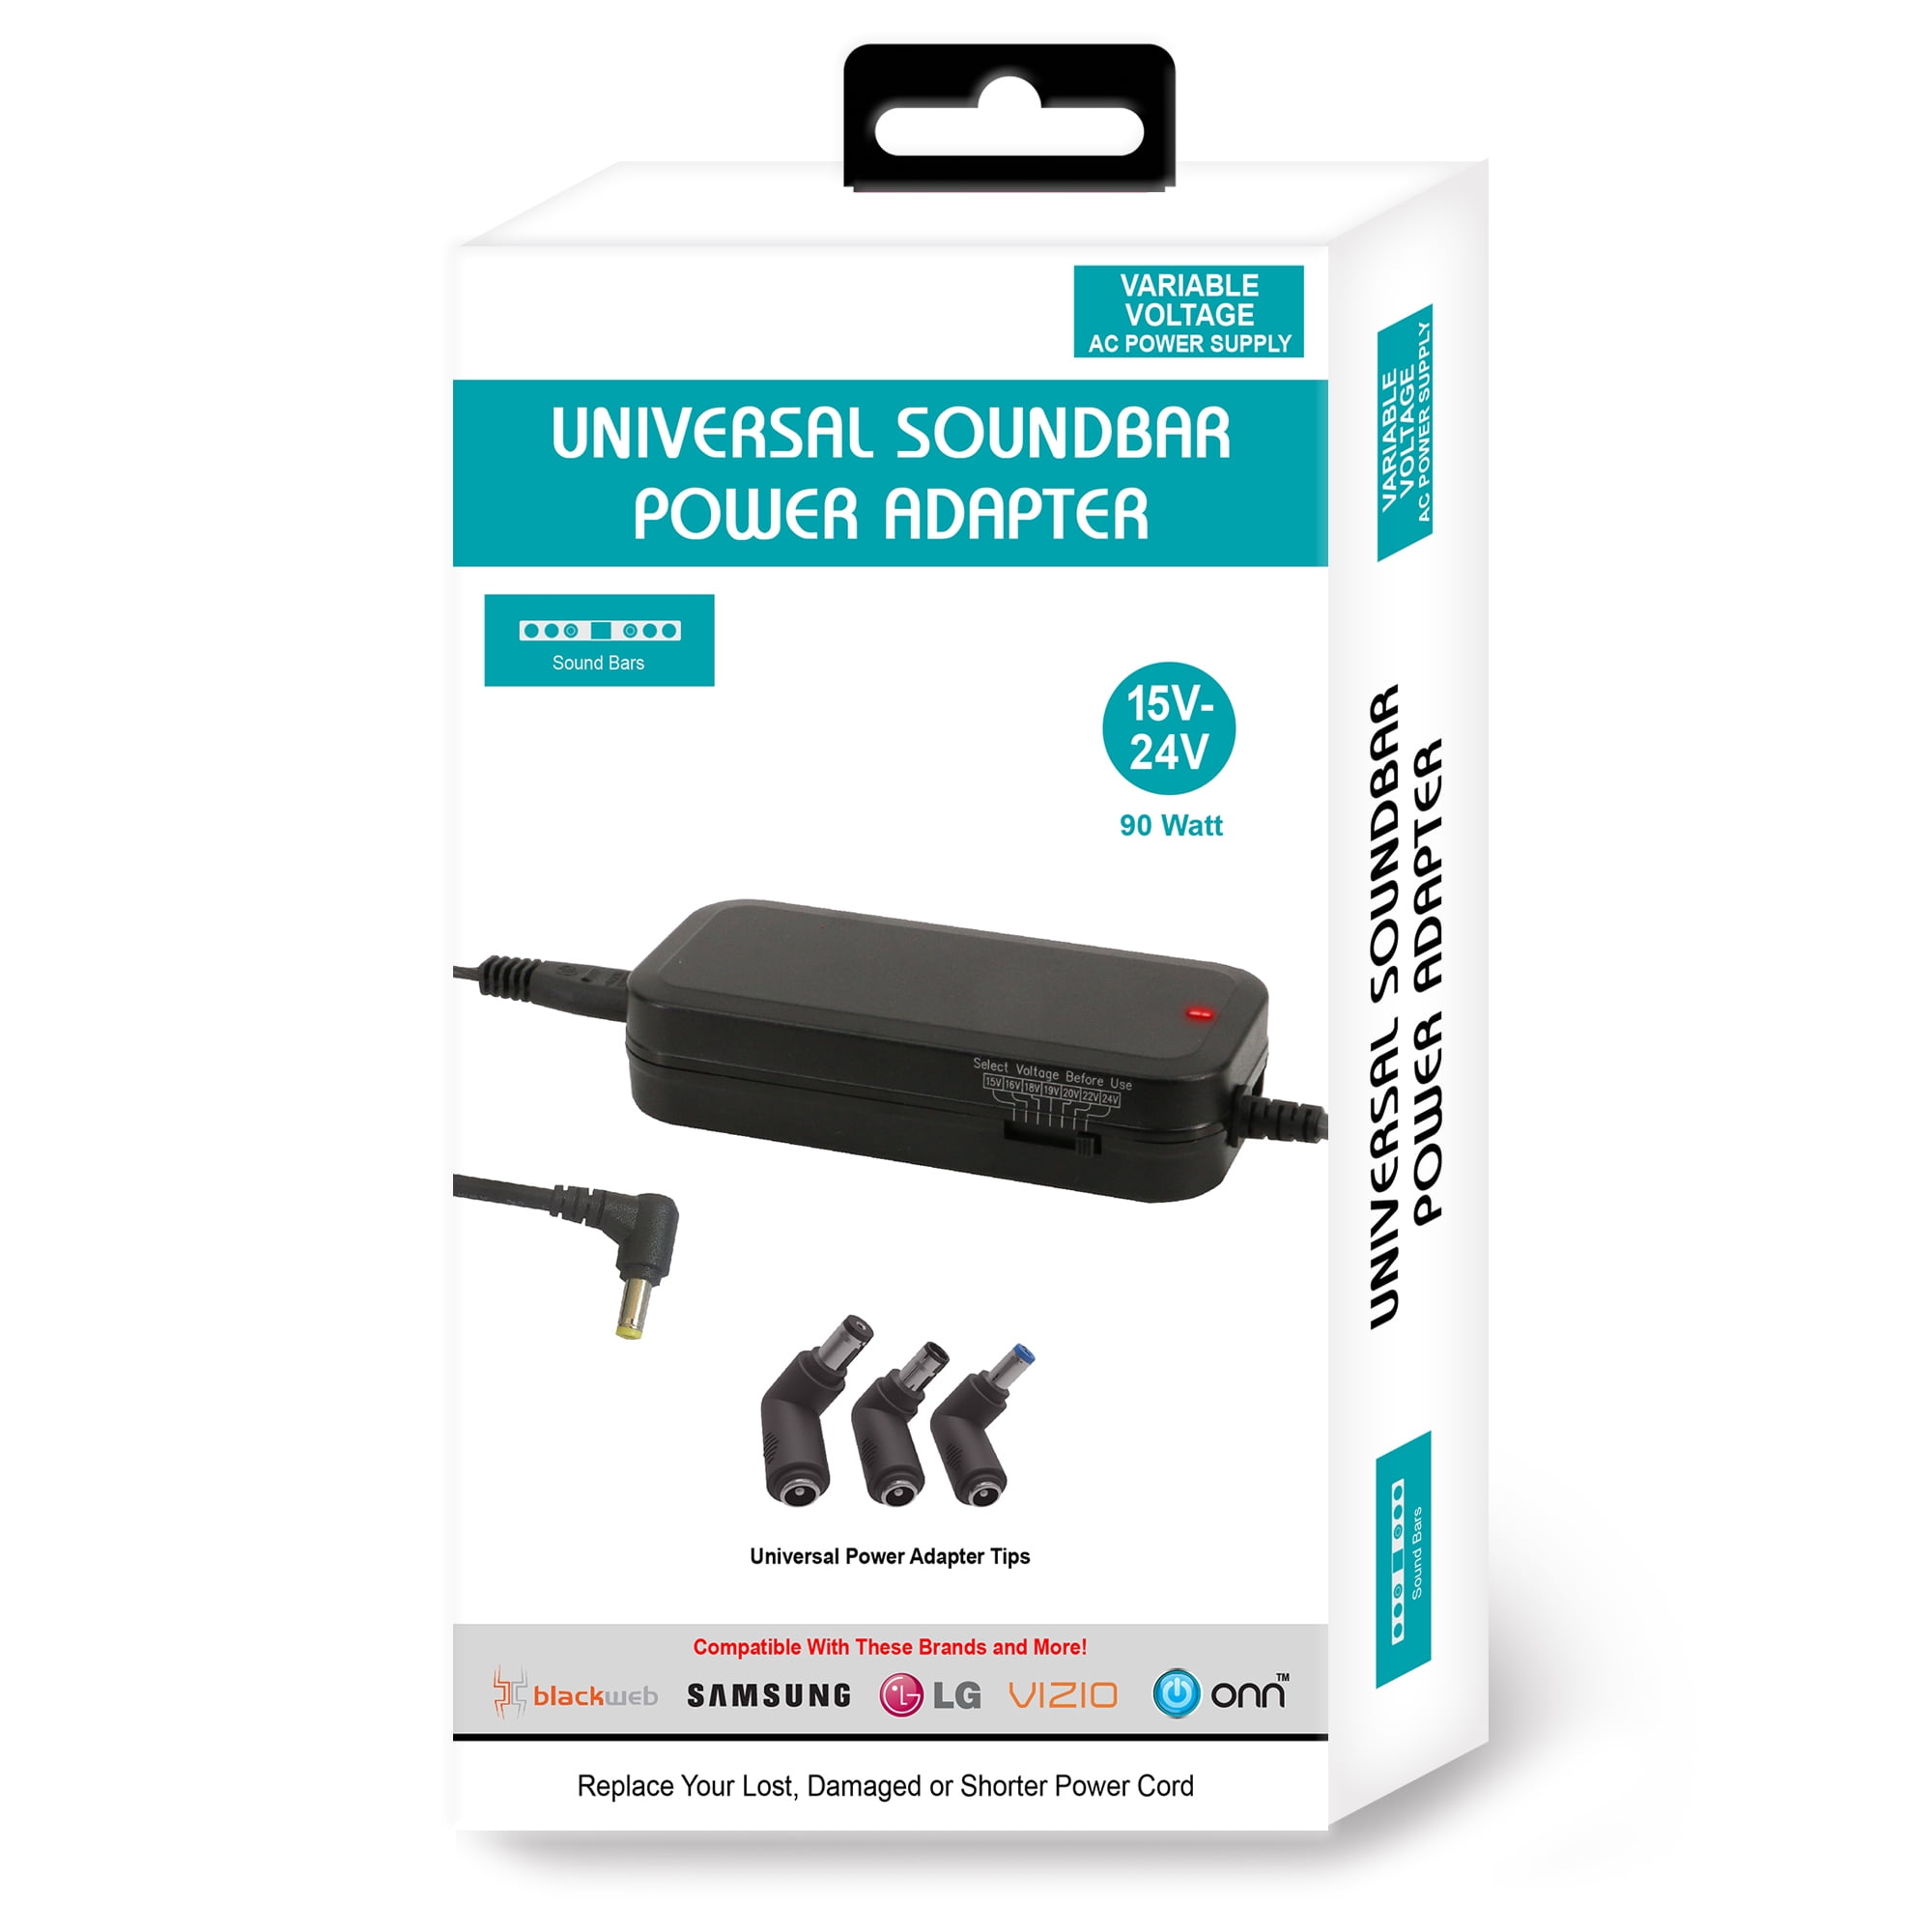 Universal Soundbar Power Adapter, Replace your Power Cord, Variable Voltage 15V 24V, 90 Watt - Walmart.com